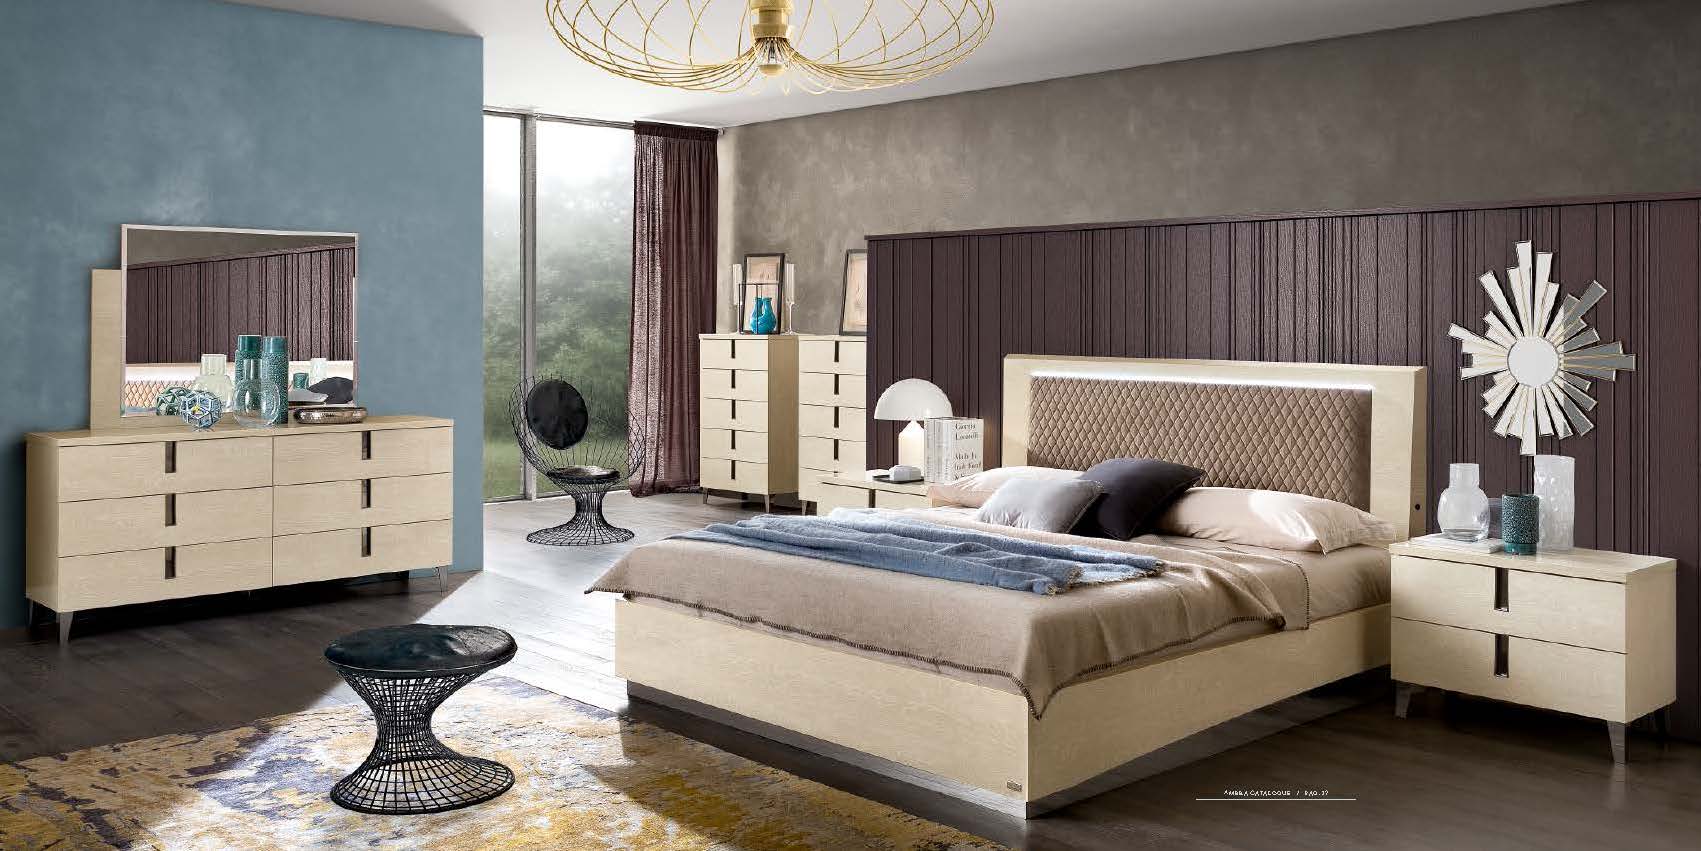 Bedroom Furniture Beds Ambra Bedroom Additional Items